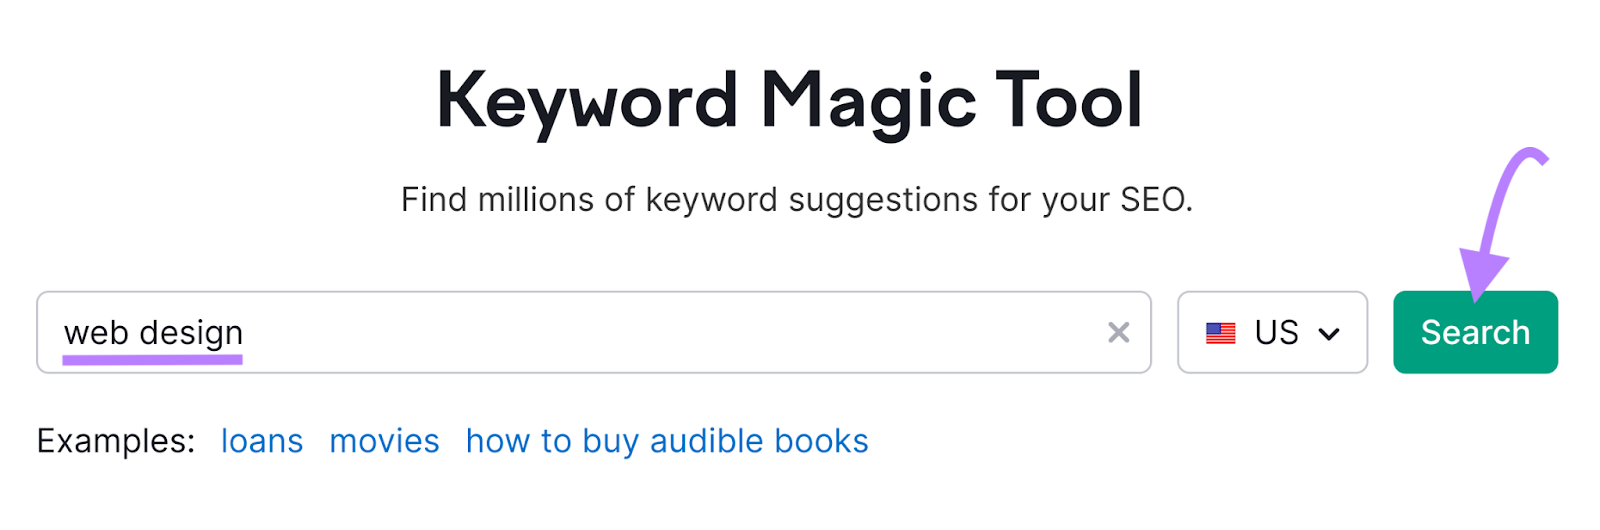 Keyword Magic Tool search for "web design"